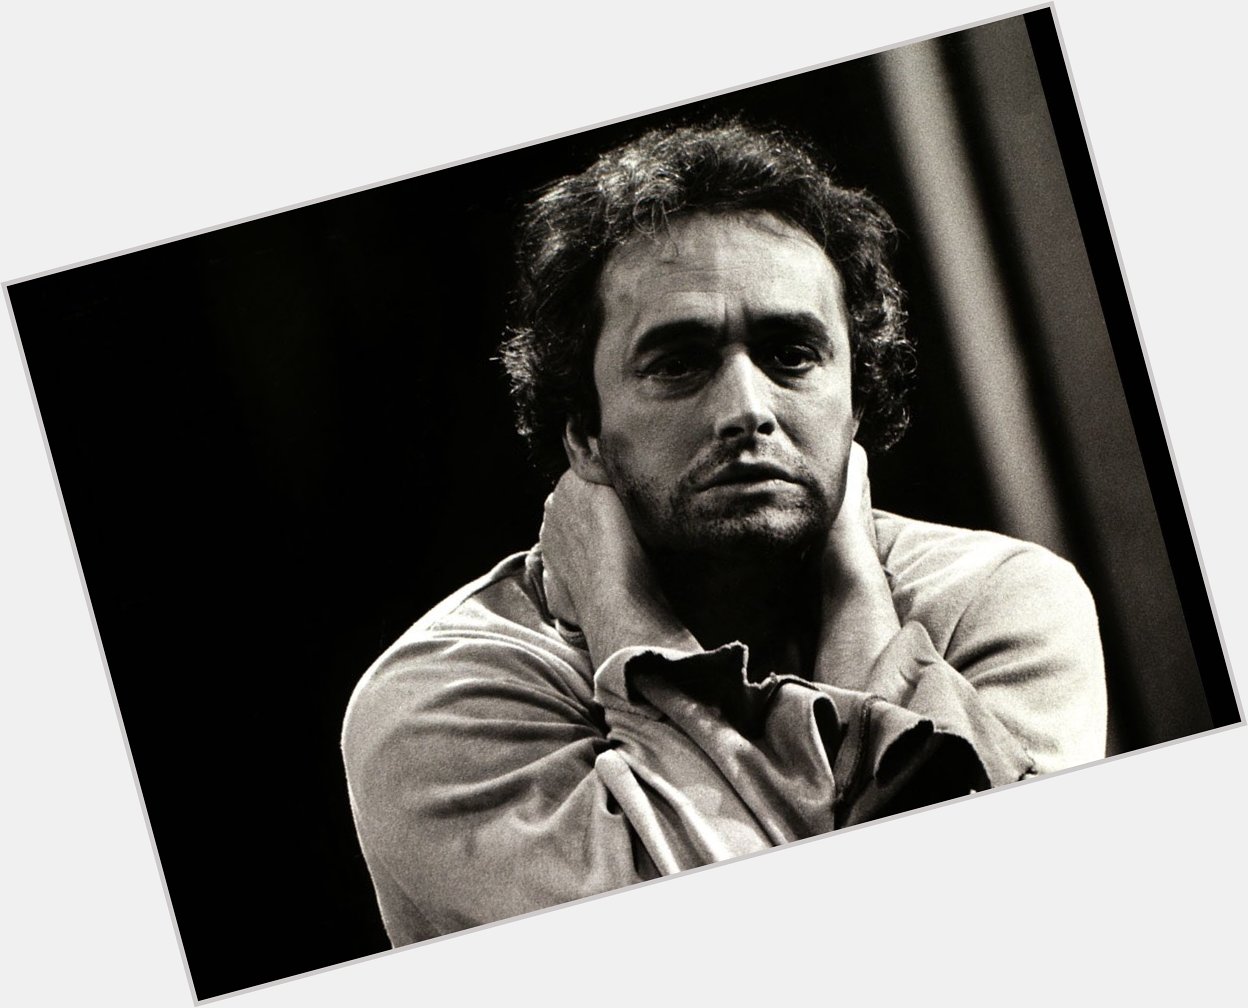 Happy Birthday to opera singer (tenor) Jose Carreras born on December 5, 1946 